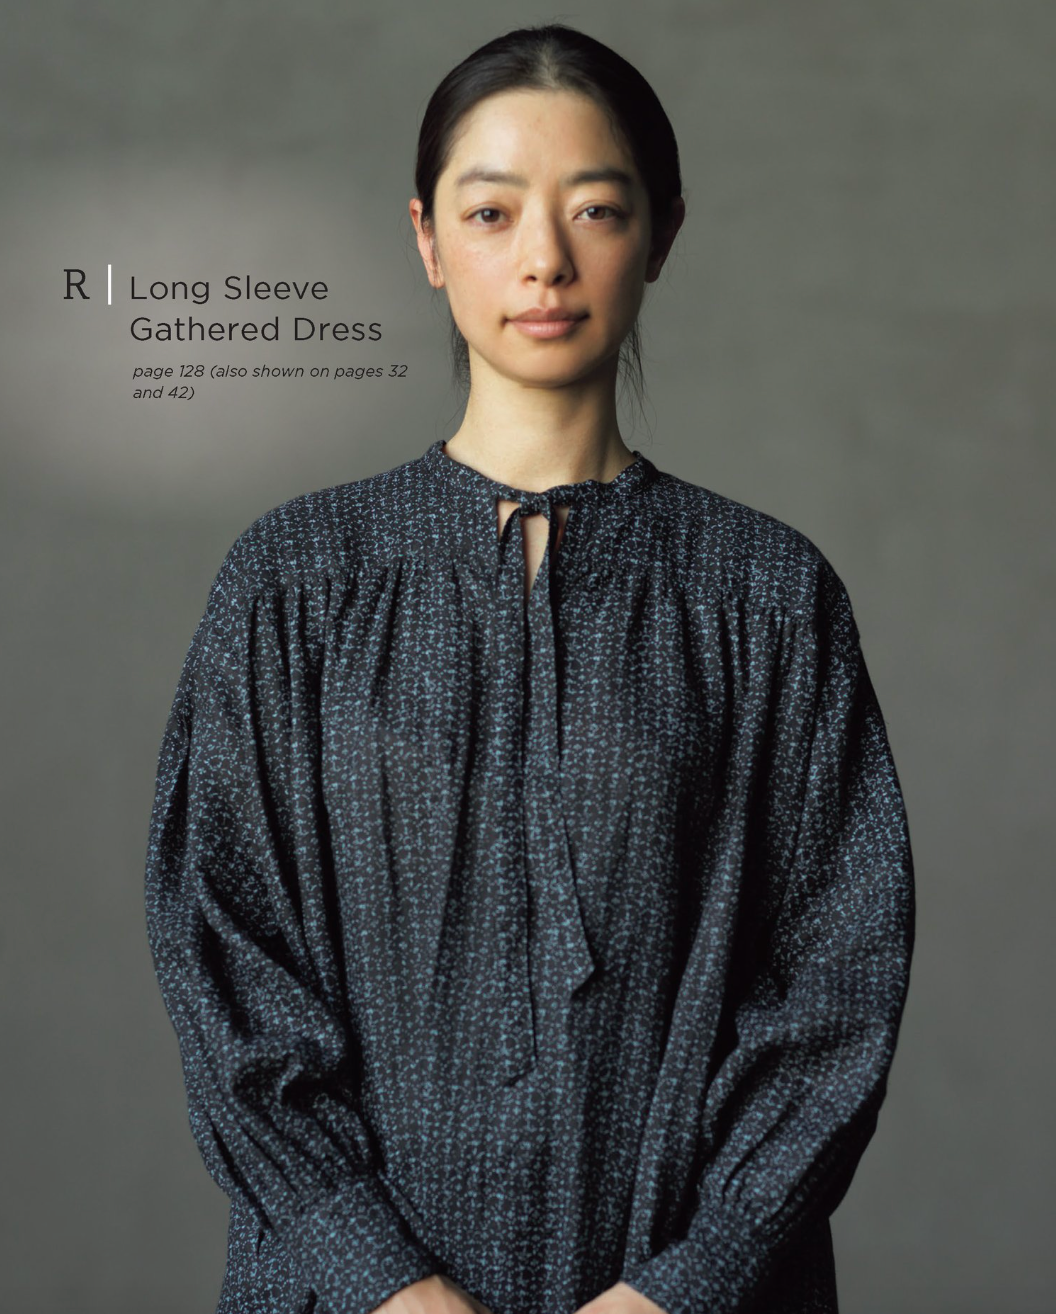 A Year of Sewing with Nani Iro by Naomi Ito